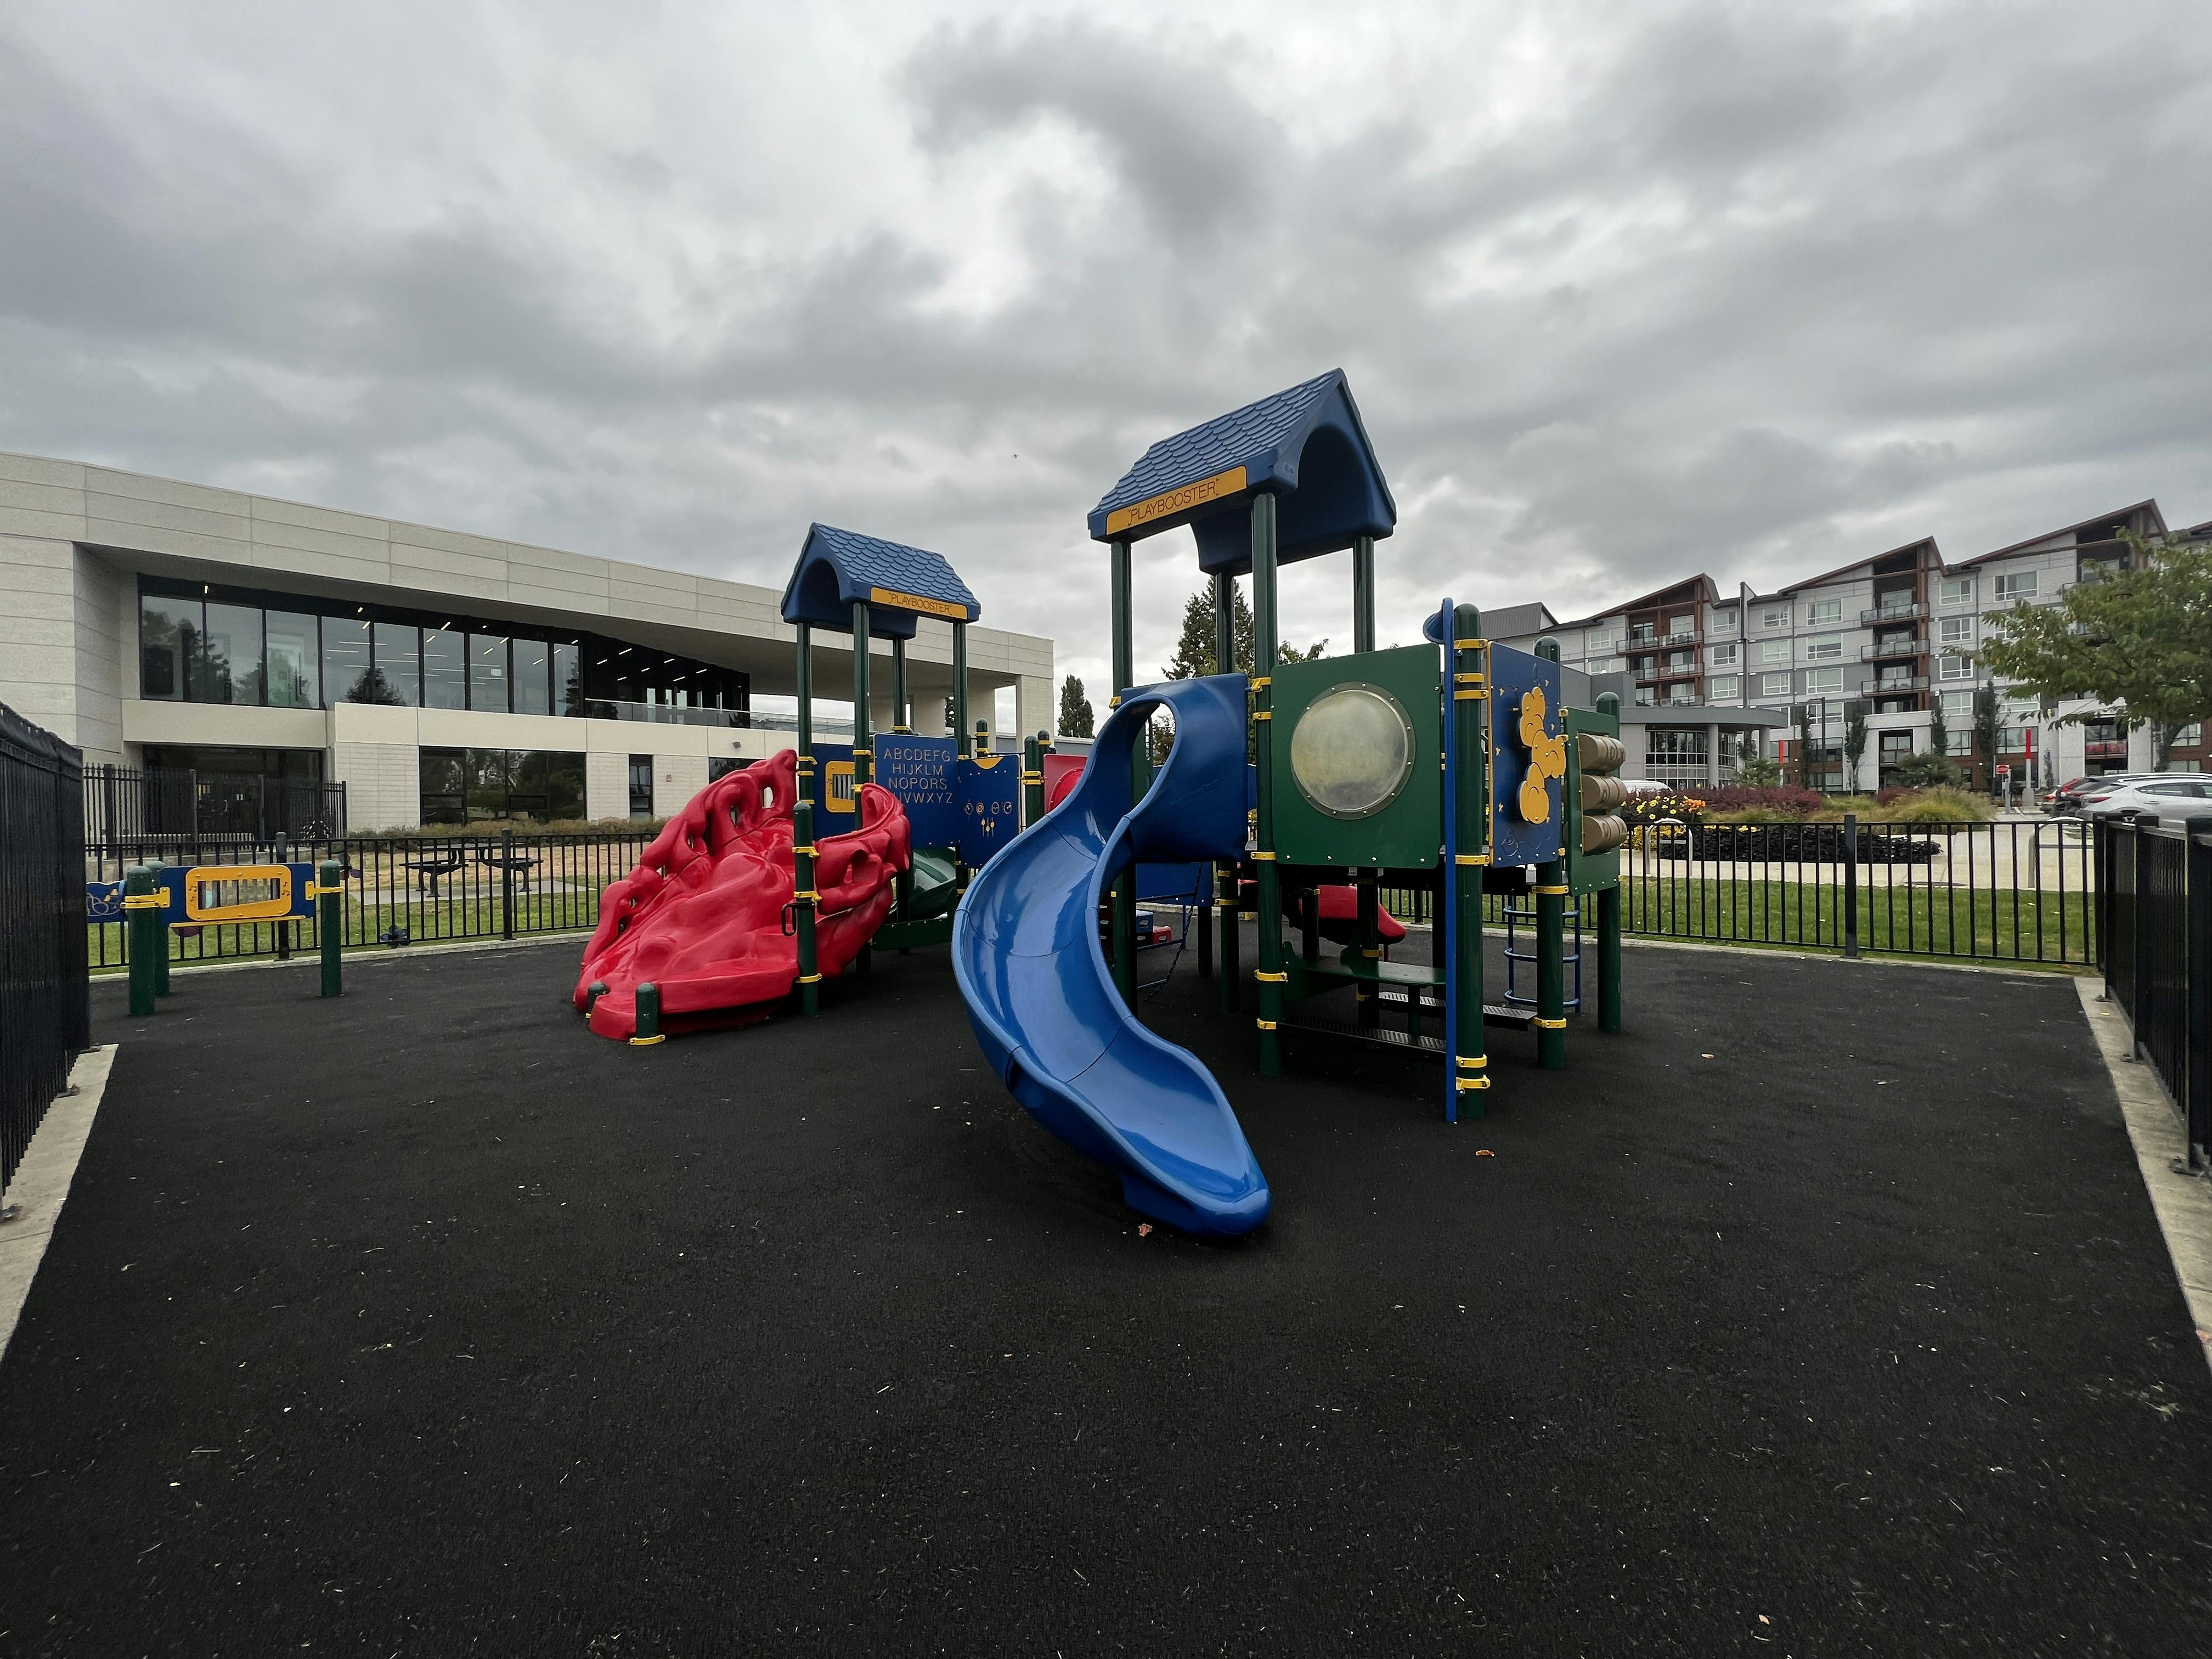 Existing playground